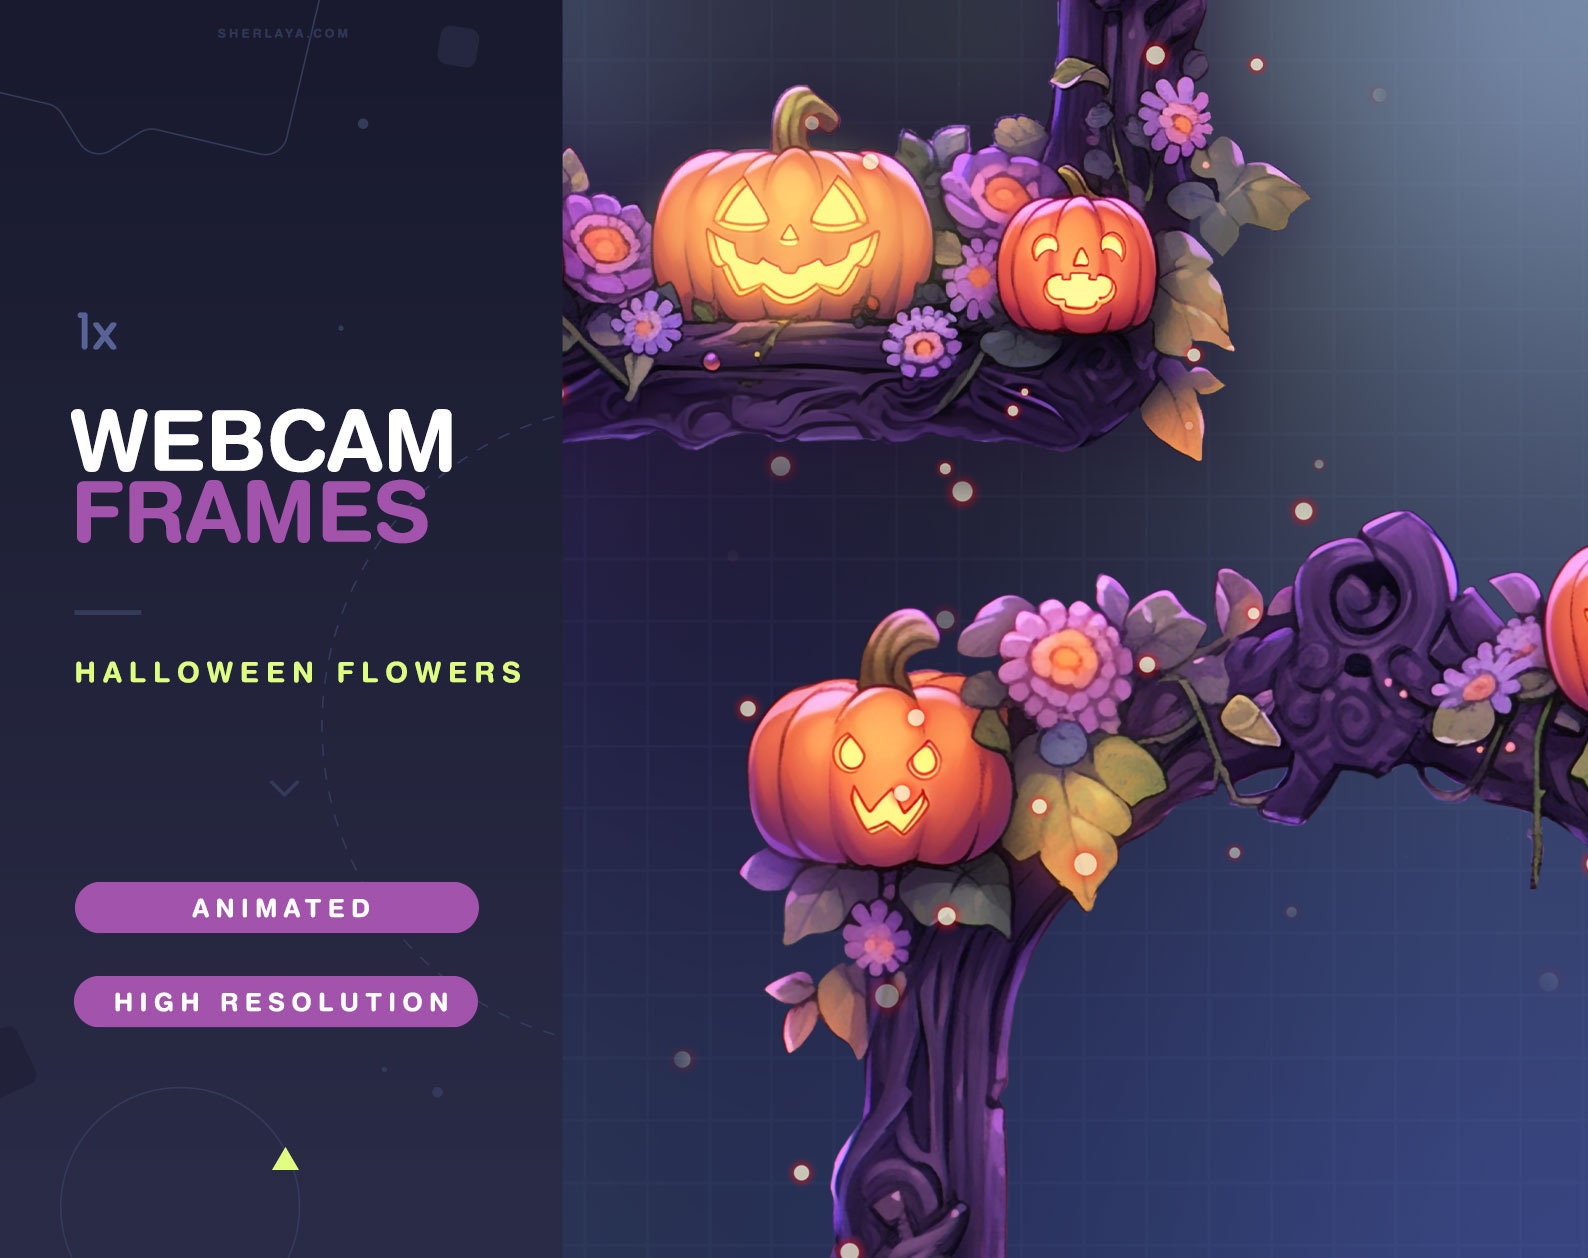 Devil Cam Frame Stream Camera Frame Spooky Halloween 